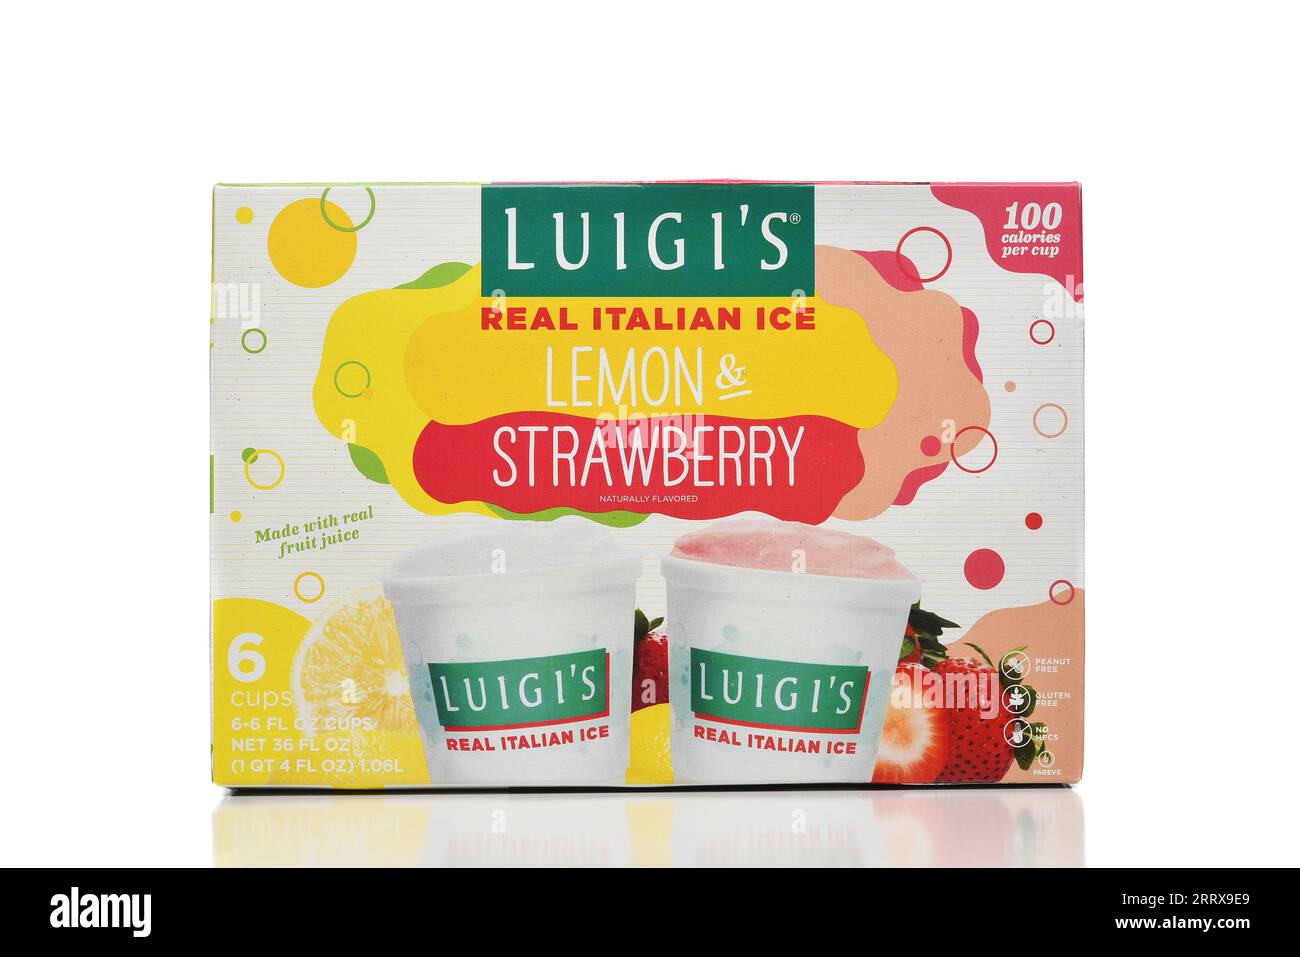 IRVINE, KALIFORNIEN - 1. SEPTEMBER 2023: Eine Schachtel Luigis Real Italian Ice, Lemon and Strawberry Flavored. Stockfoto